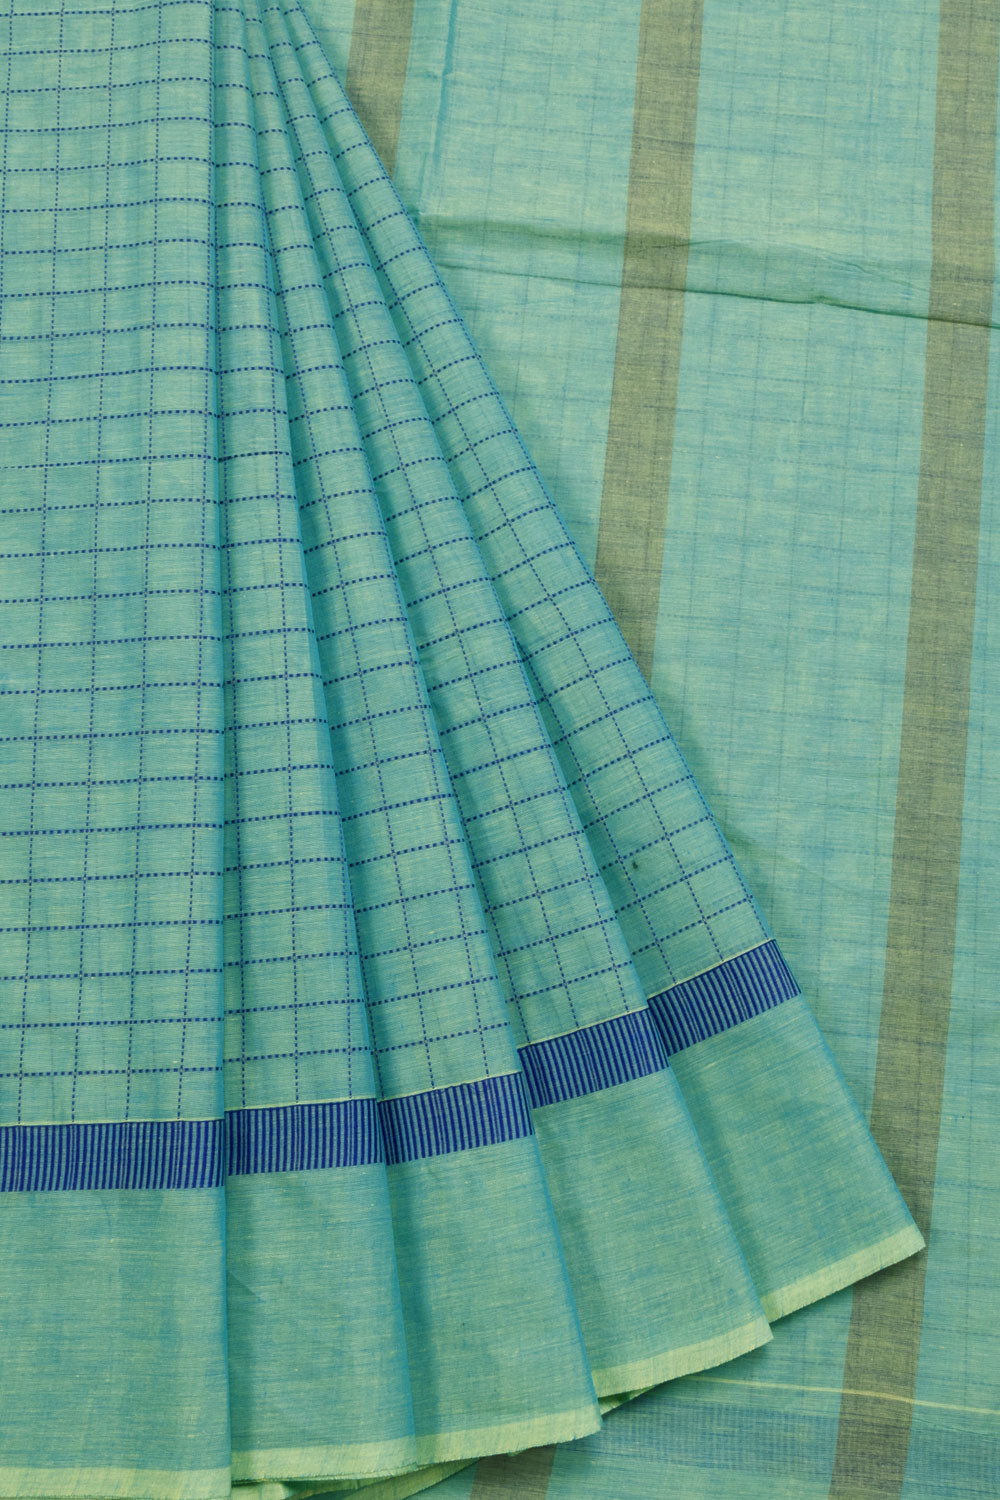 Dual Tone Blue Handwoven Kanchi Cotton Saree 10069312 - Avishya